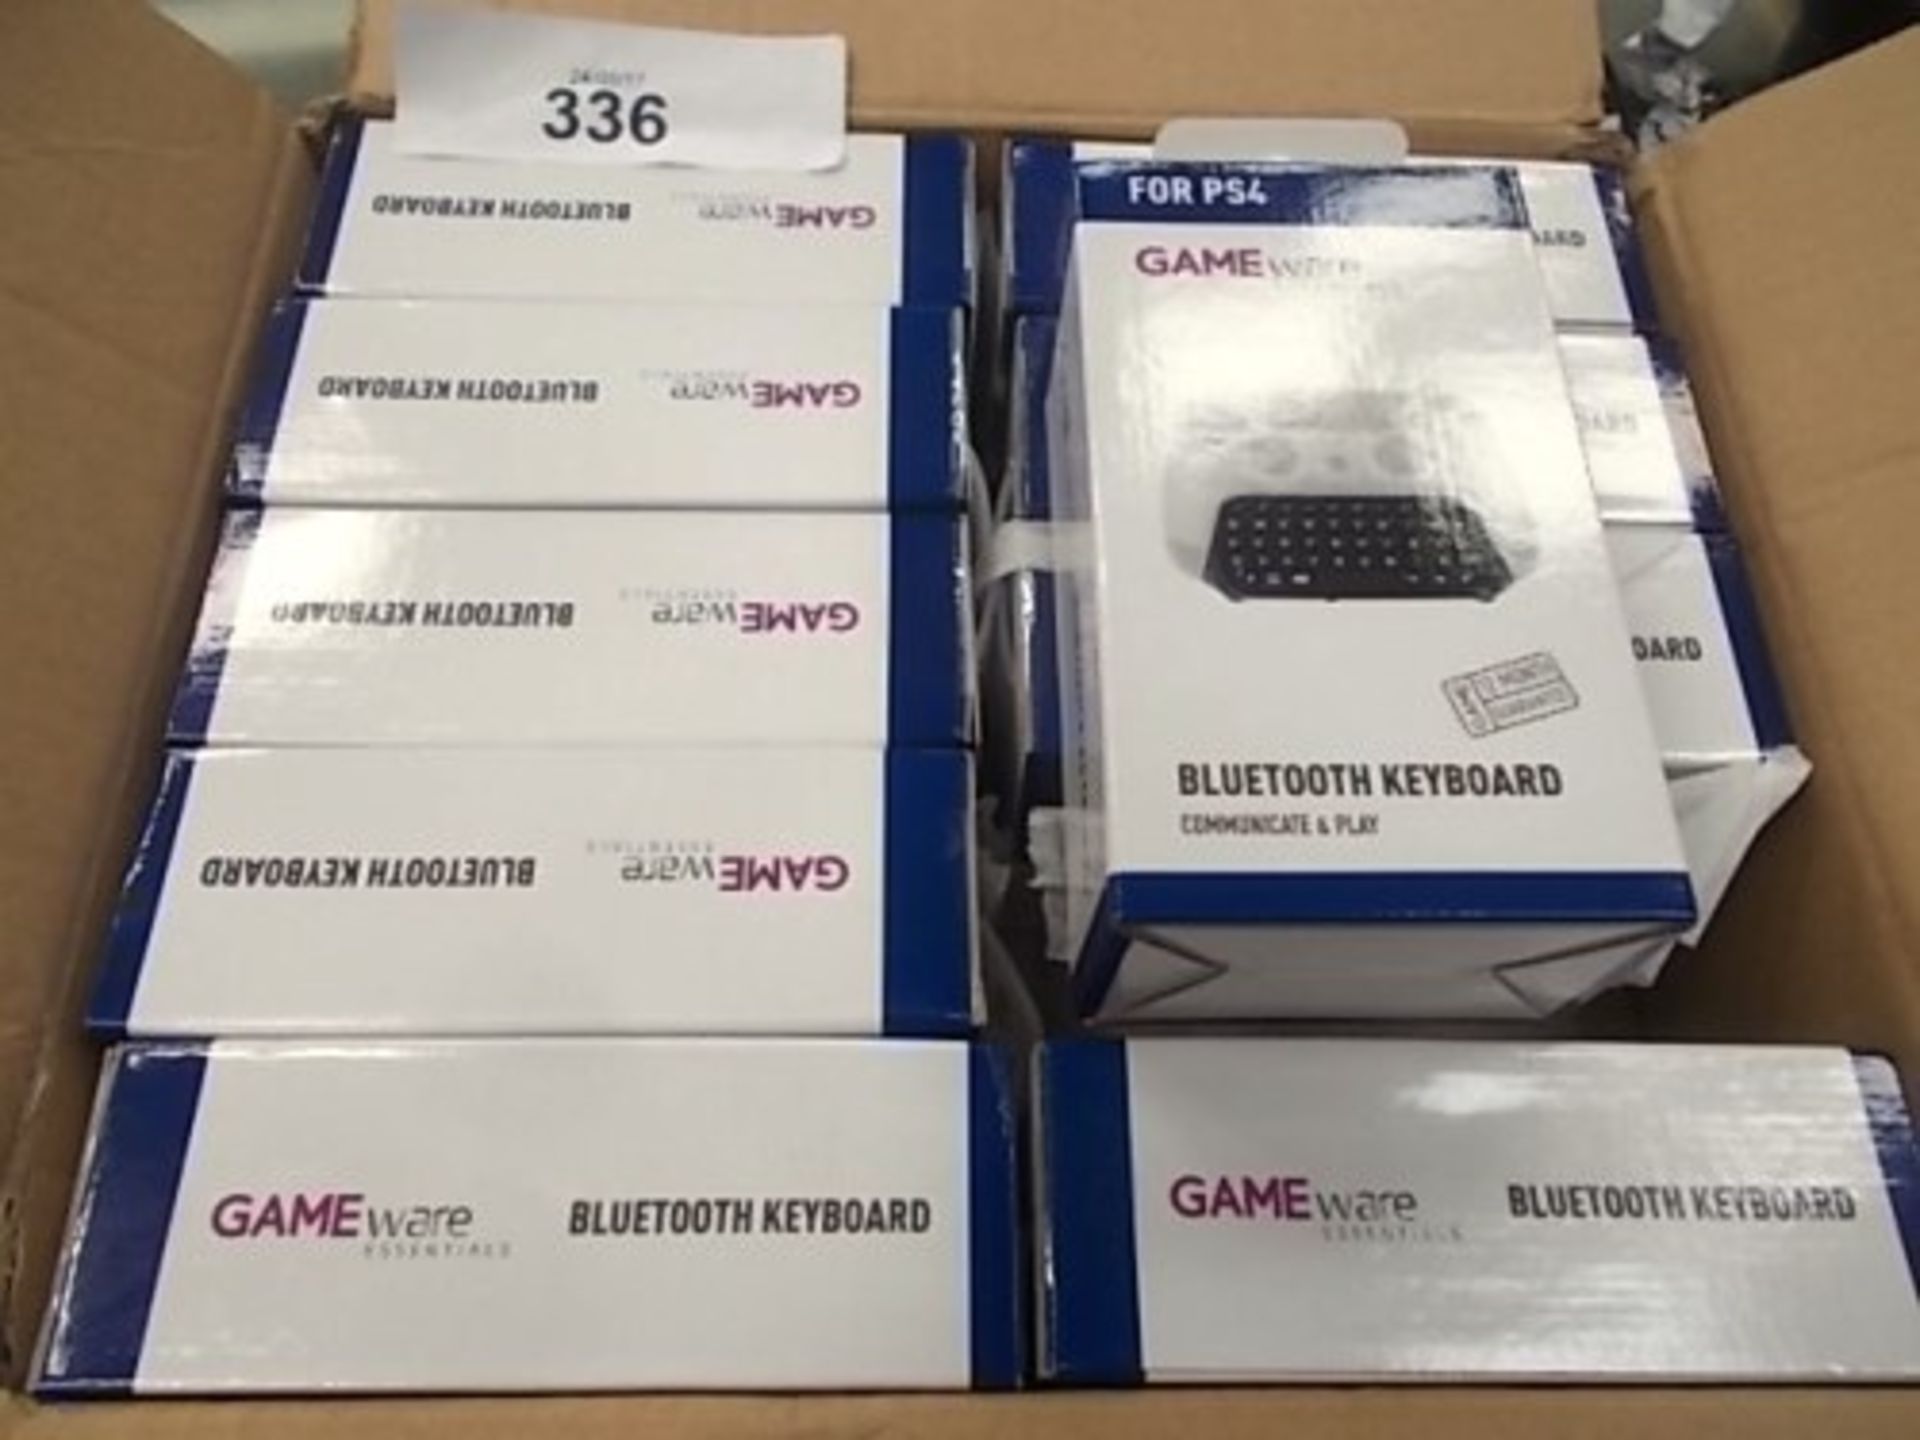 10 x Gameware Essentials PS4 Bluetooth keyboard, model 506134 - Sealed new in box (C2)